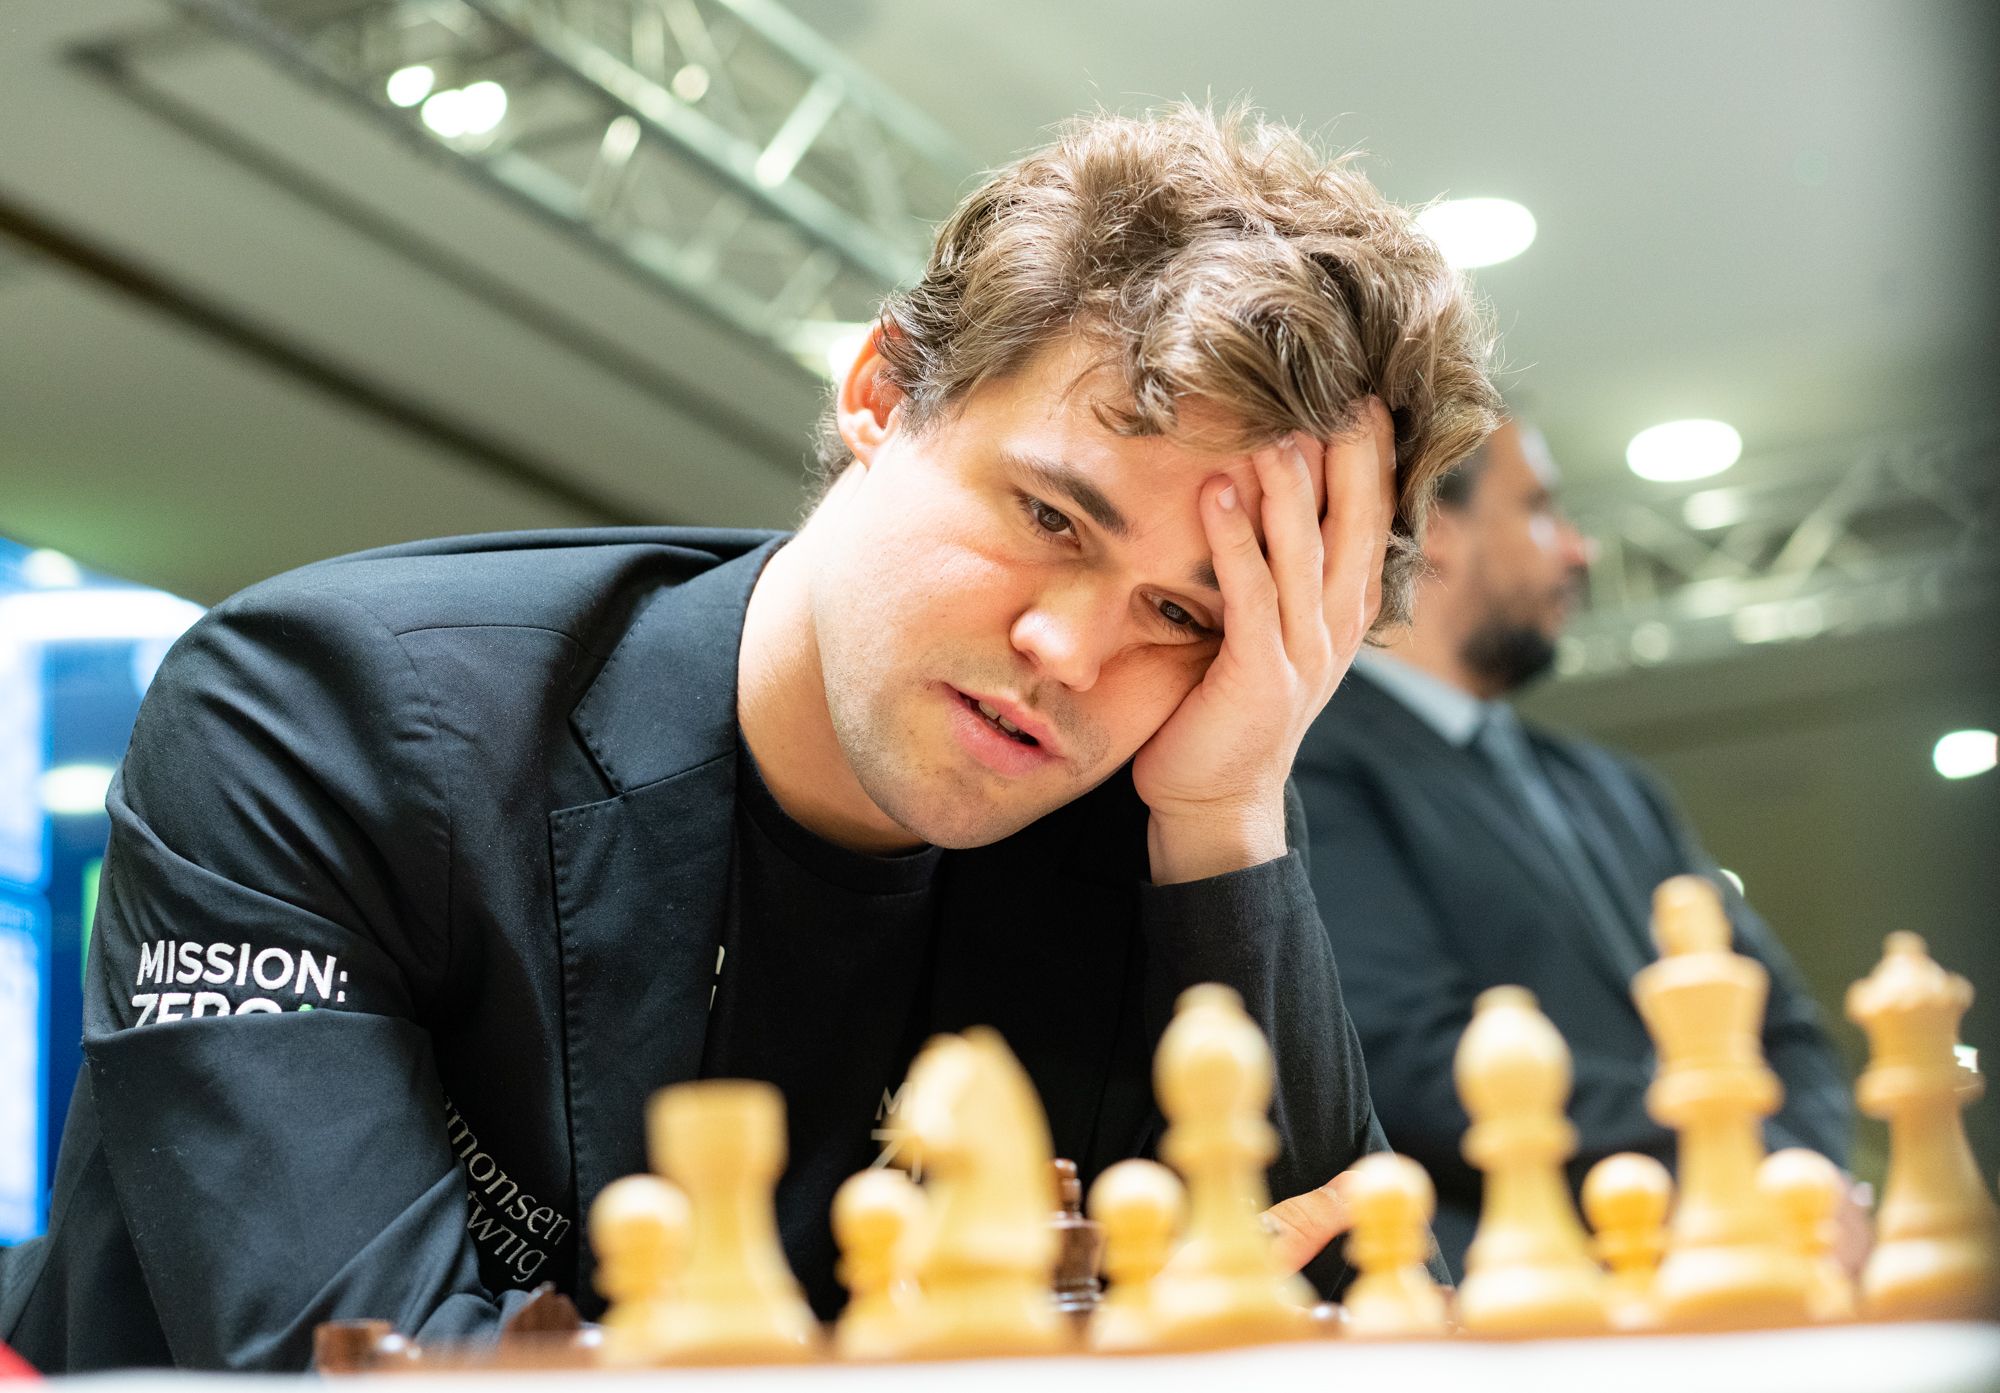 Chess: Hikaru Nakamura follows Fischer's footsteps to win in Reykjavik, Chess